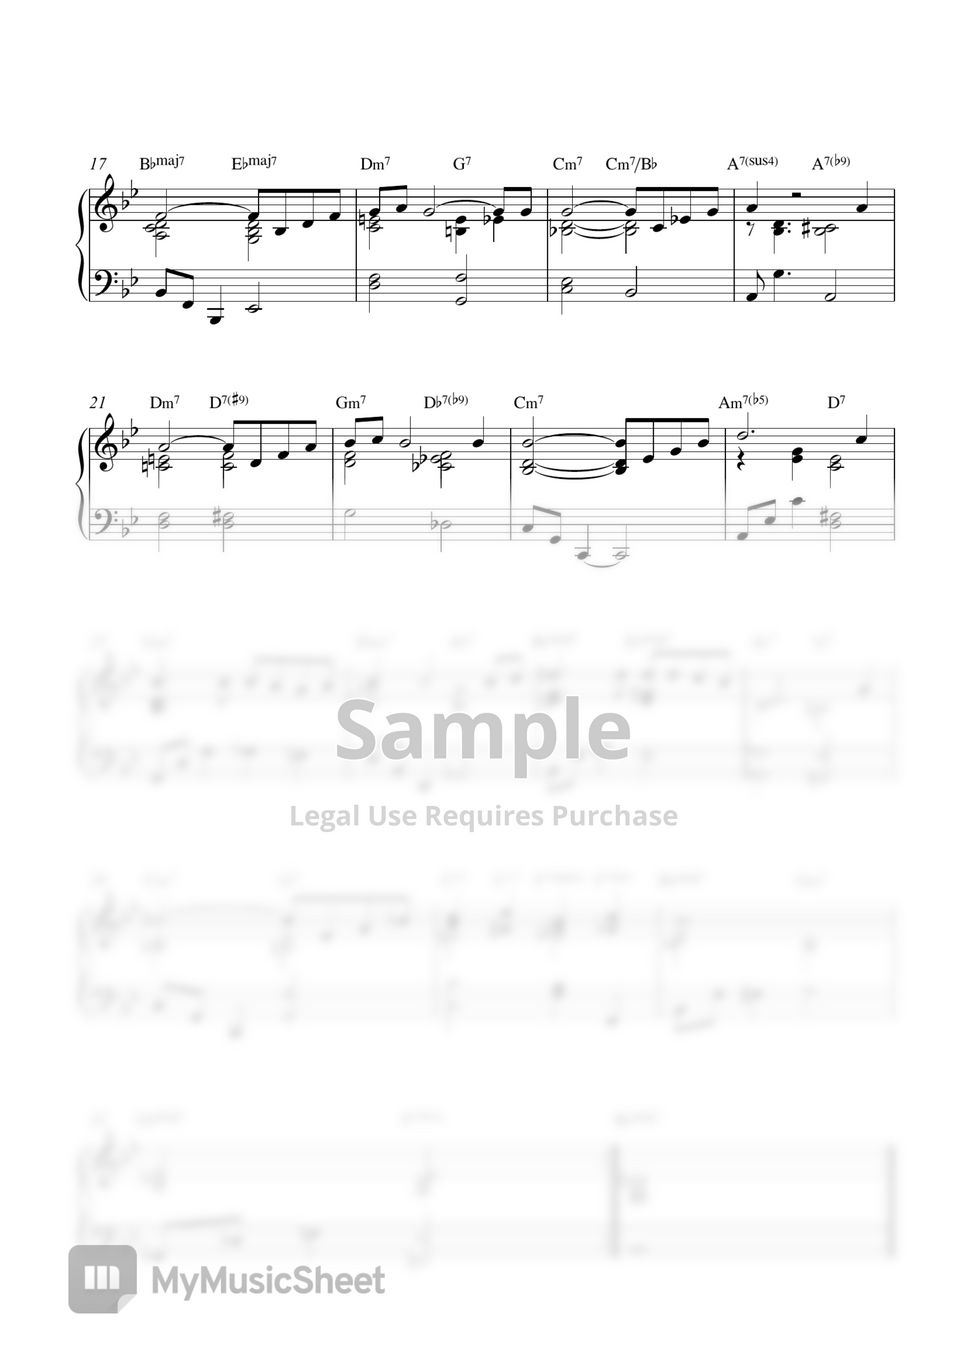 Jazz - EASY JAZZ PIANO SOLO 14곡 모음 package (REALBK.1) by 편곡 최수민